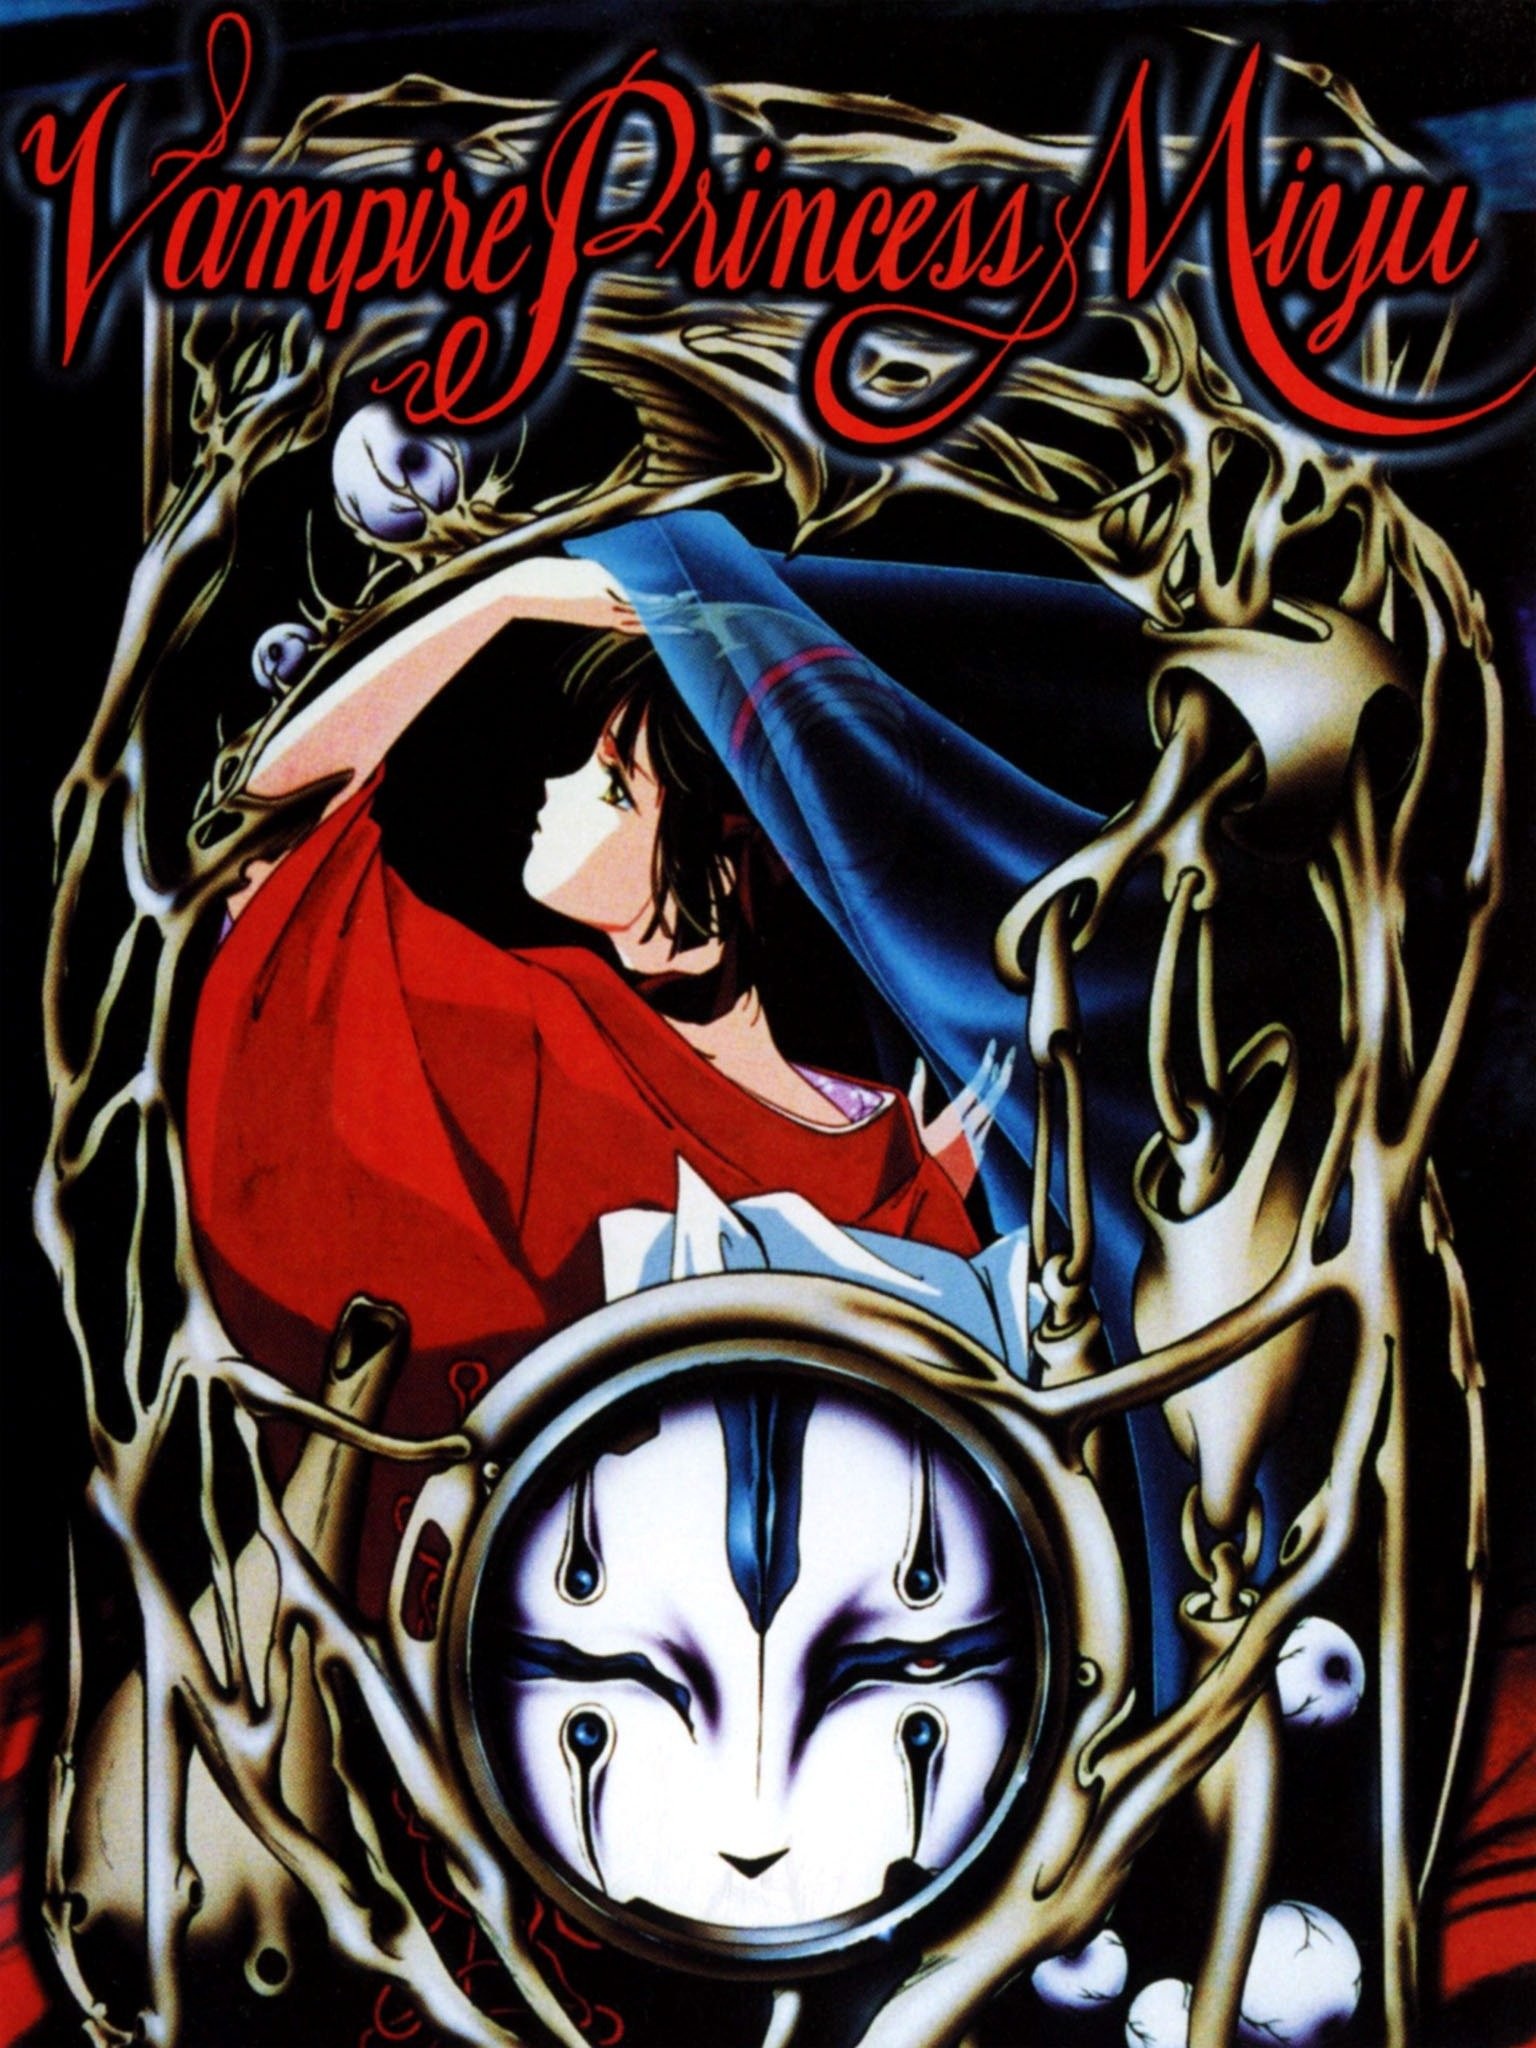 Vampire Princess Miyu Illustrations Collection book (Japanese language) //  monofanatic.com #anime #manga #otaku #cyberpunk #animeart… | Instagram